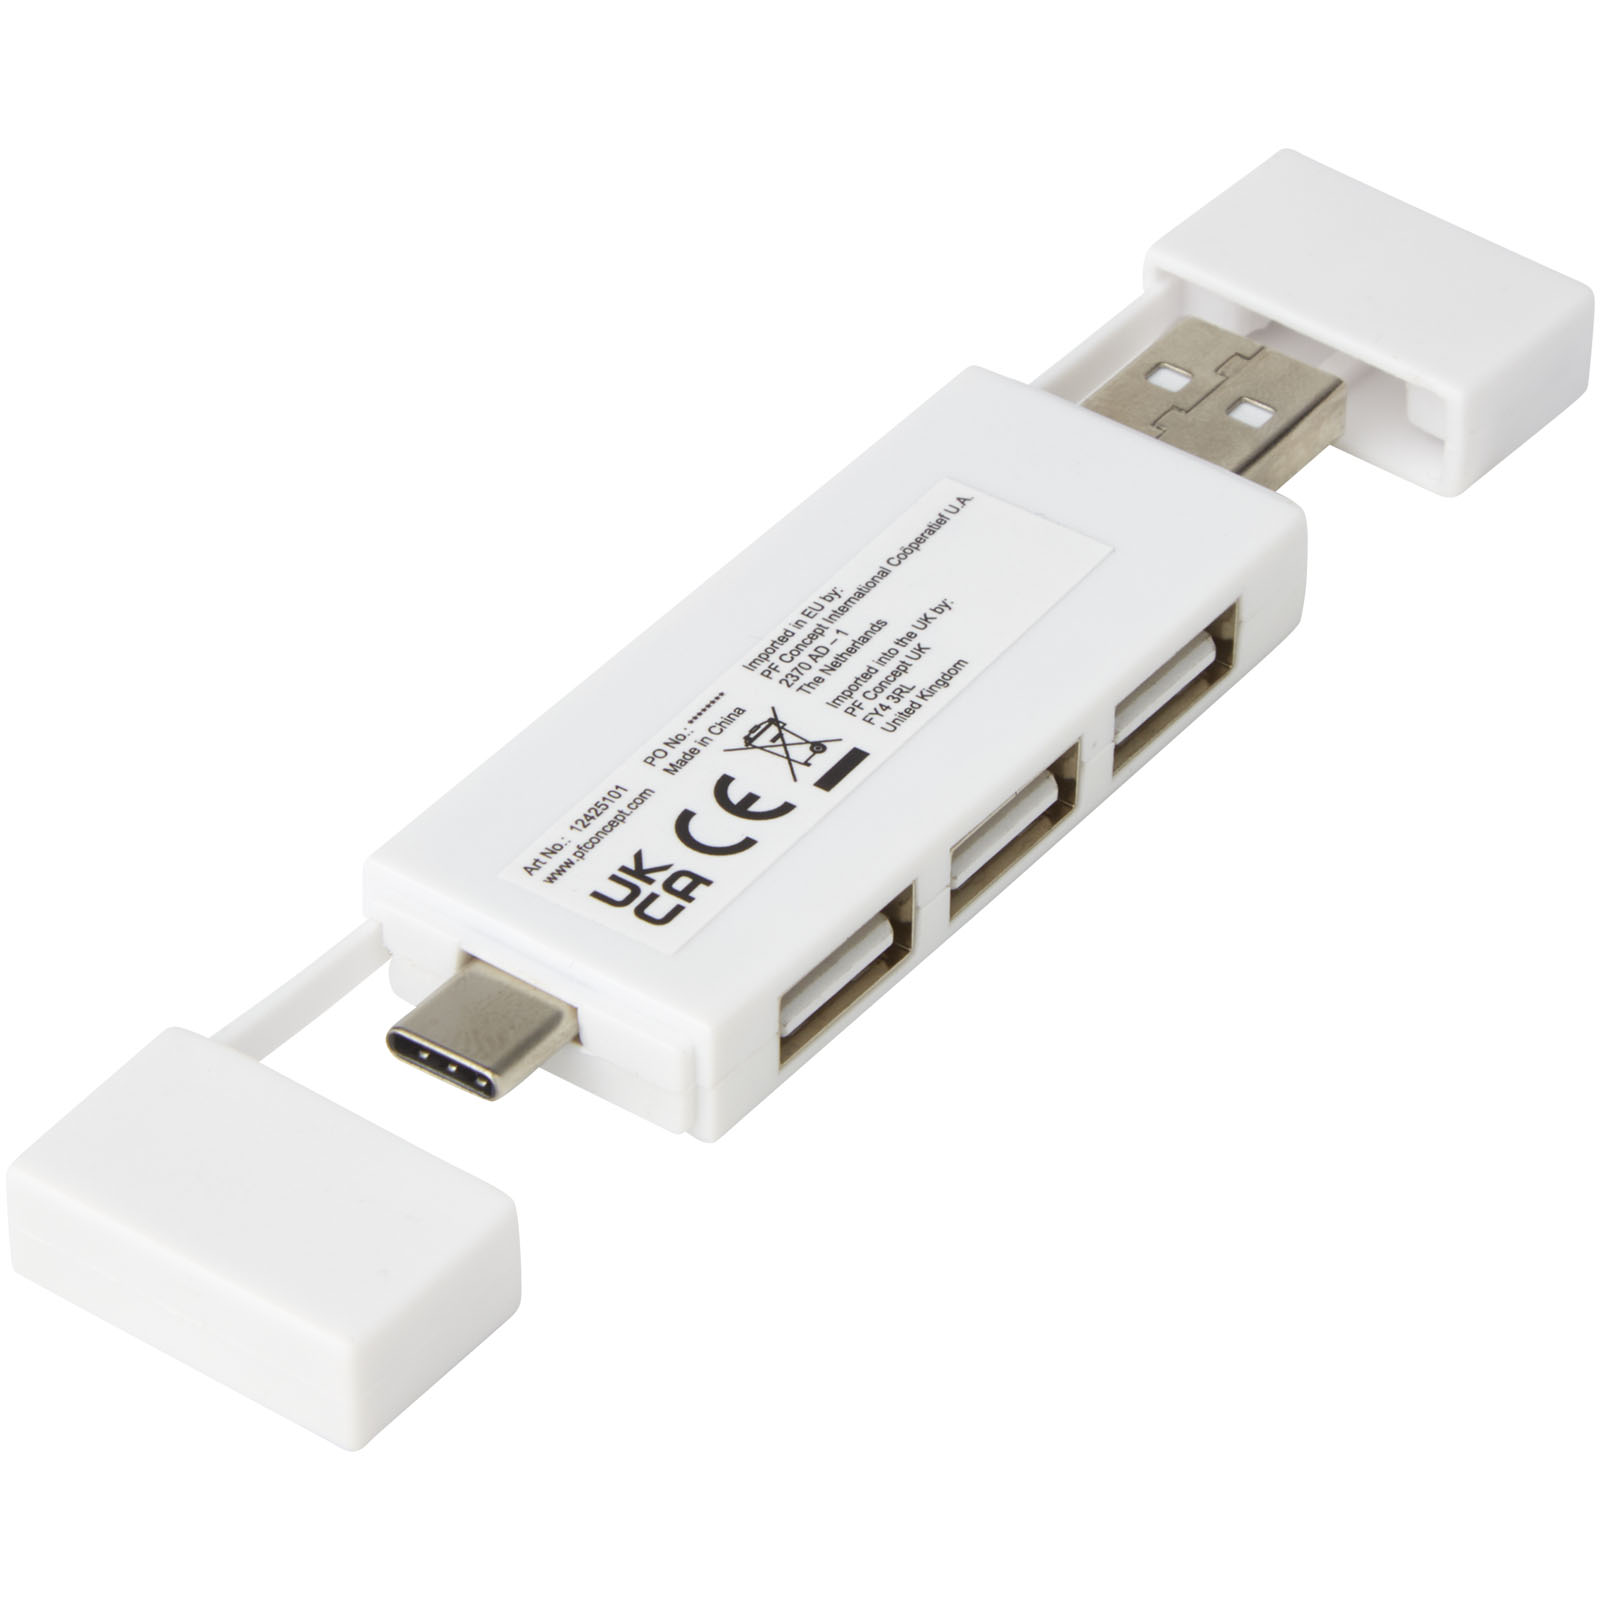 Advertising USB Hubs - Mulan dual USB 2.0 hub - 2